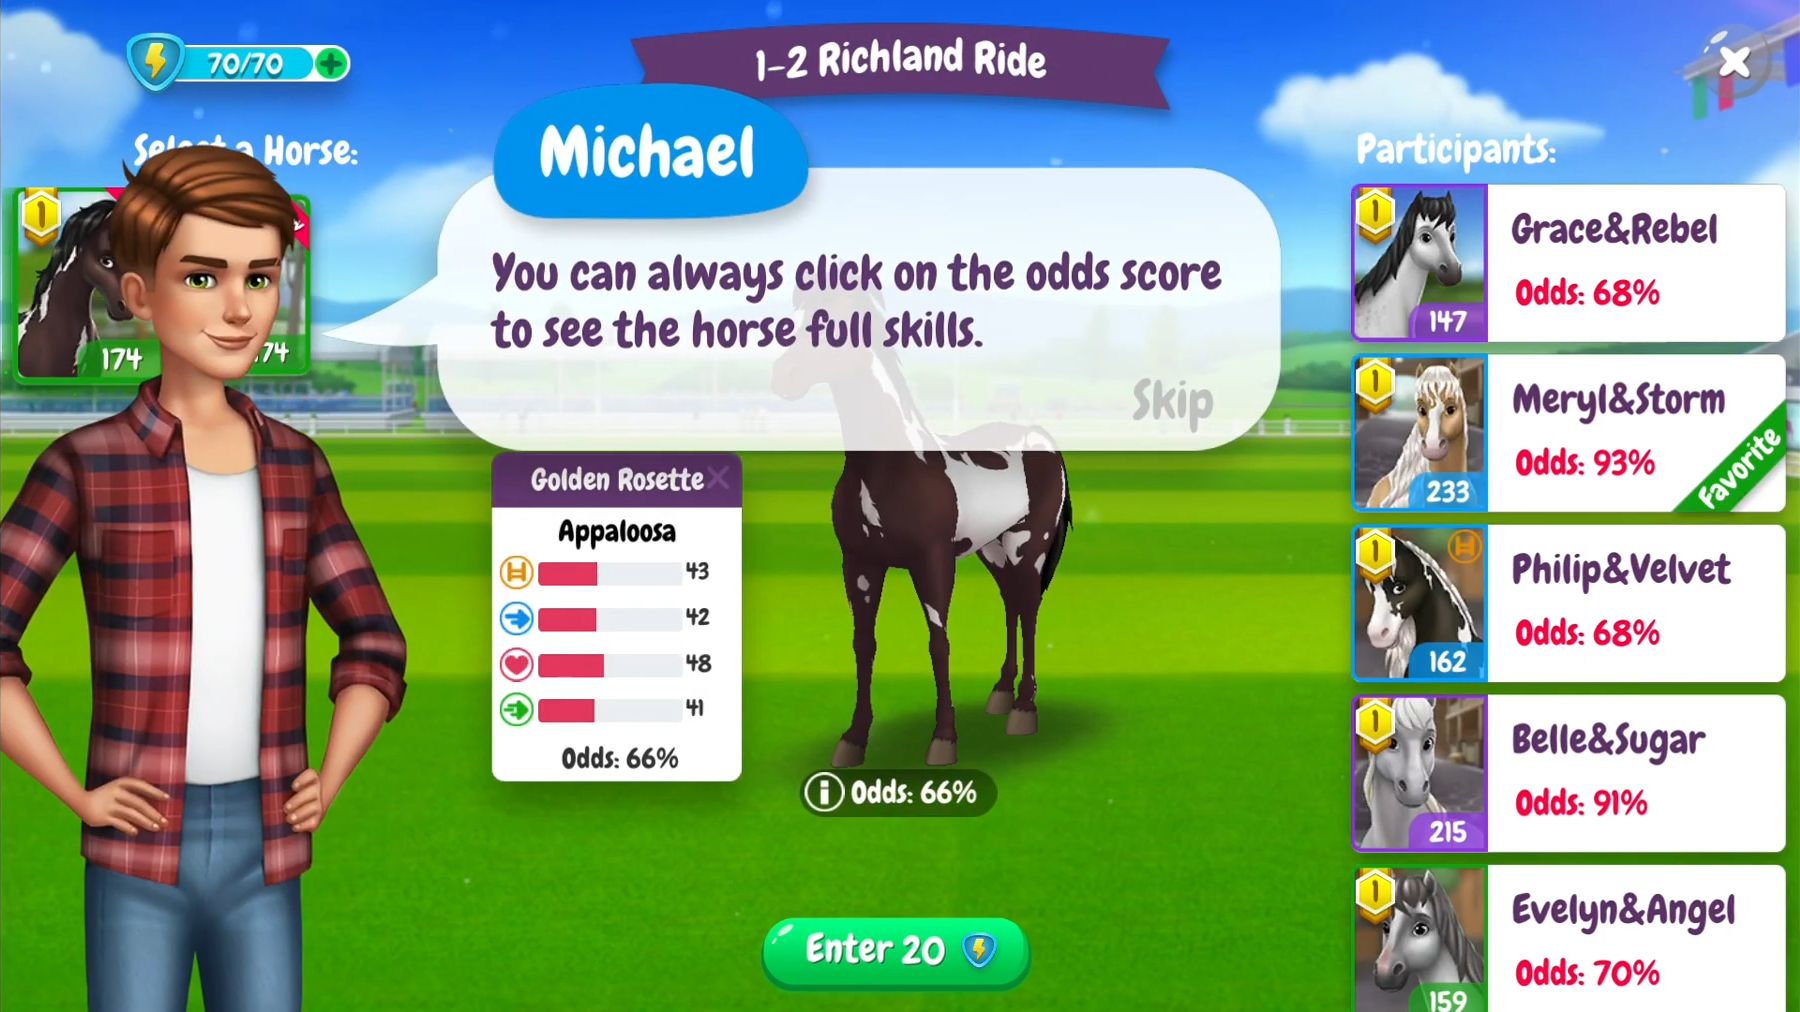 Horse Legends: Epic Ride Game скриншот 1